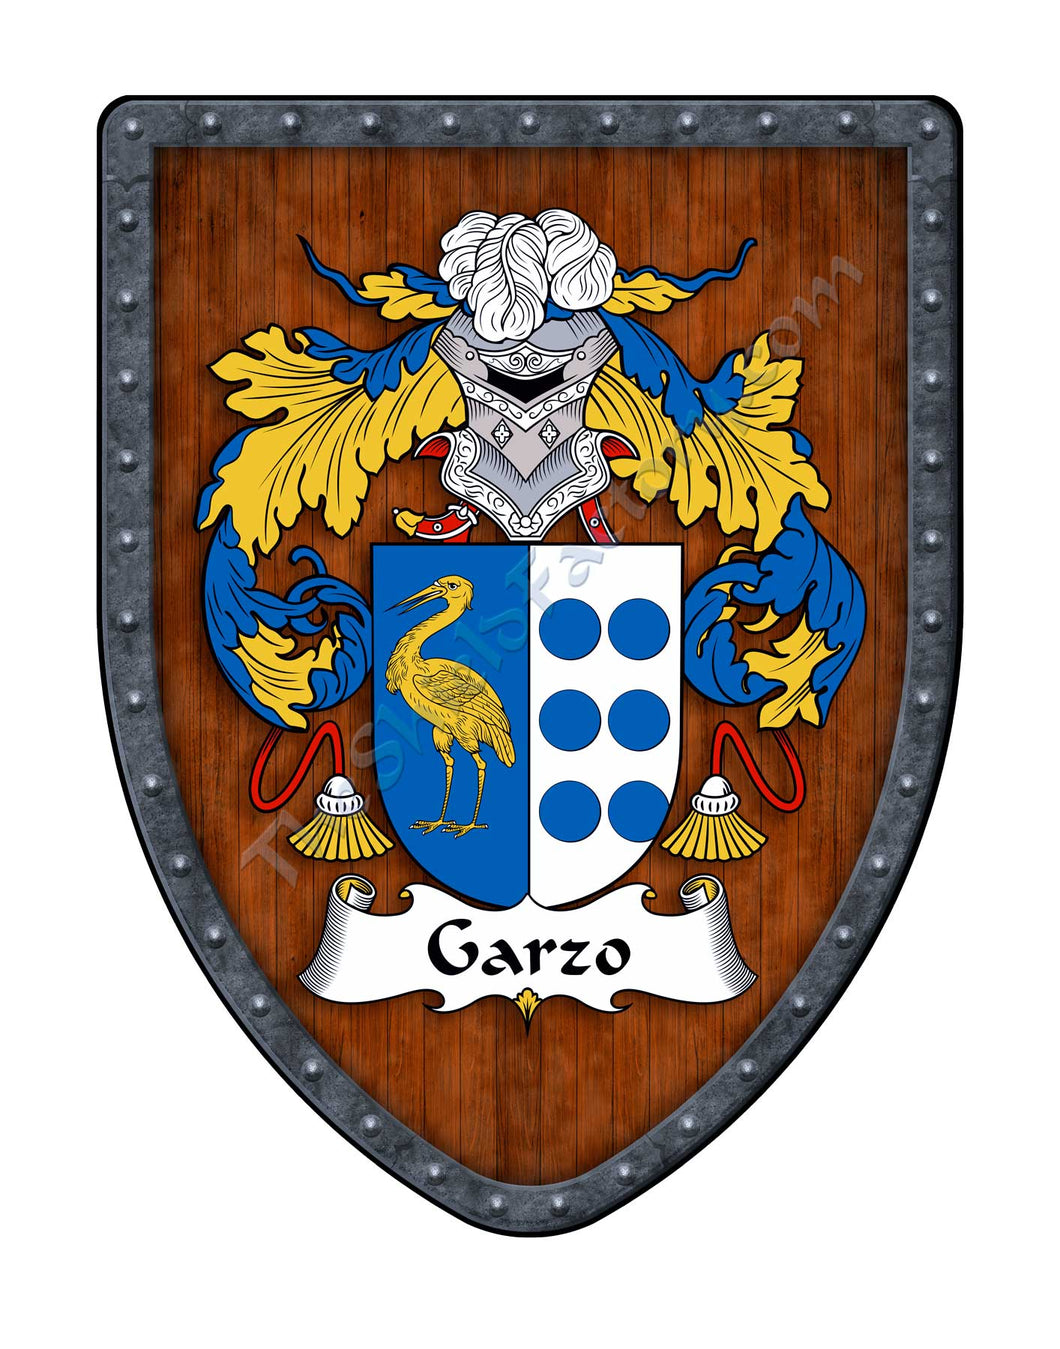 Garzo Coat of Arms Shield